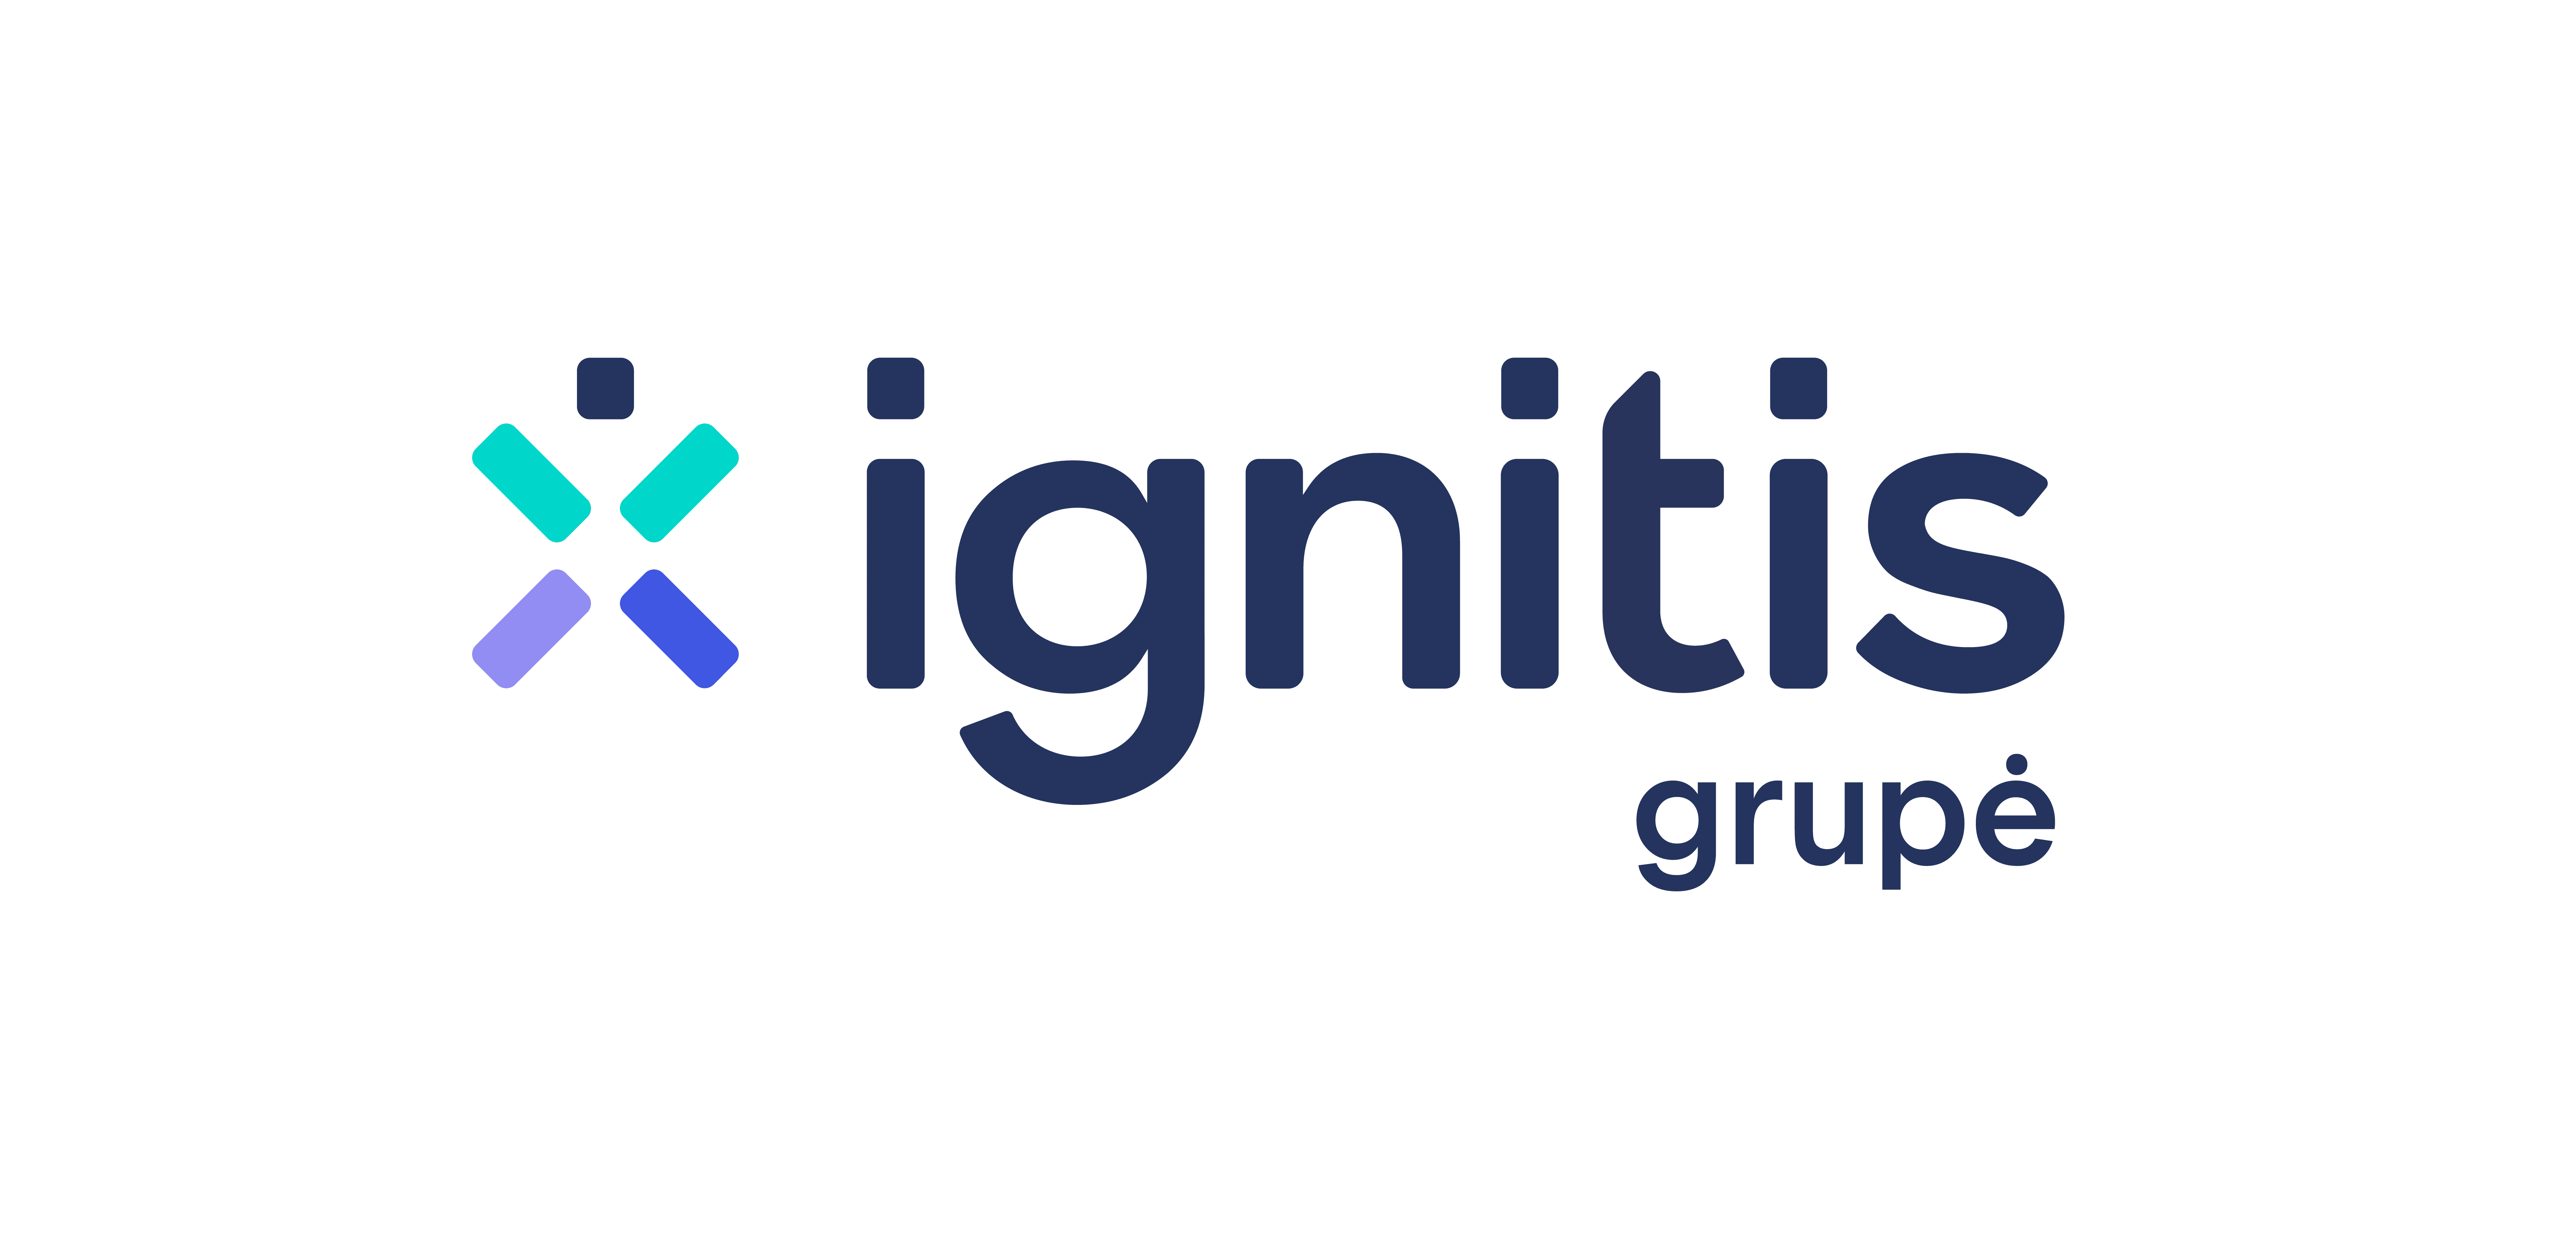 ignitis logo